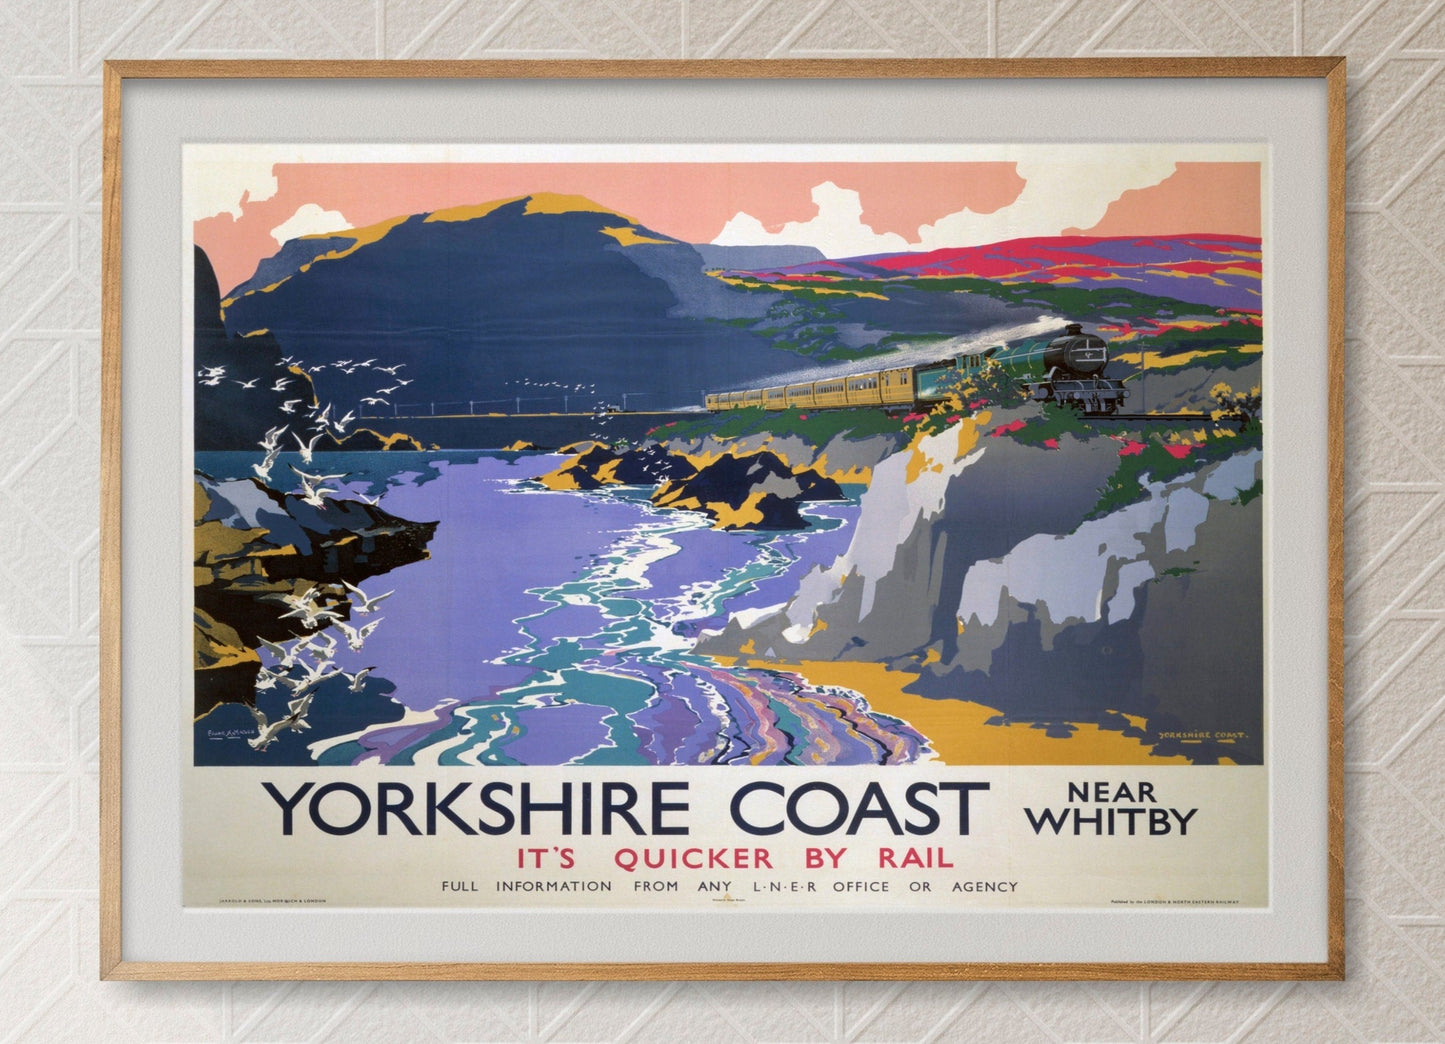 Yorkshire Train Travel Poster Illustration Print Wall Hanging Decor